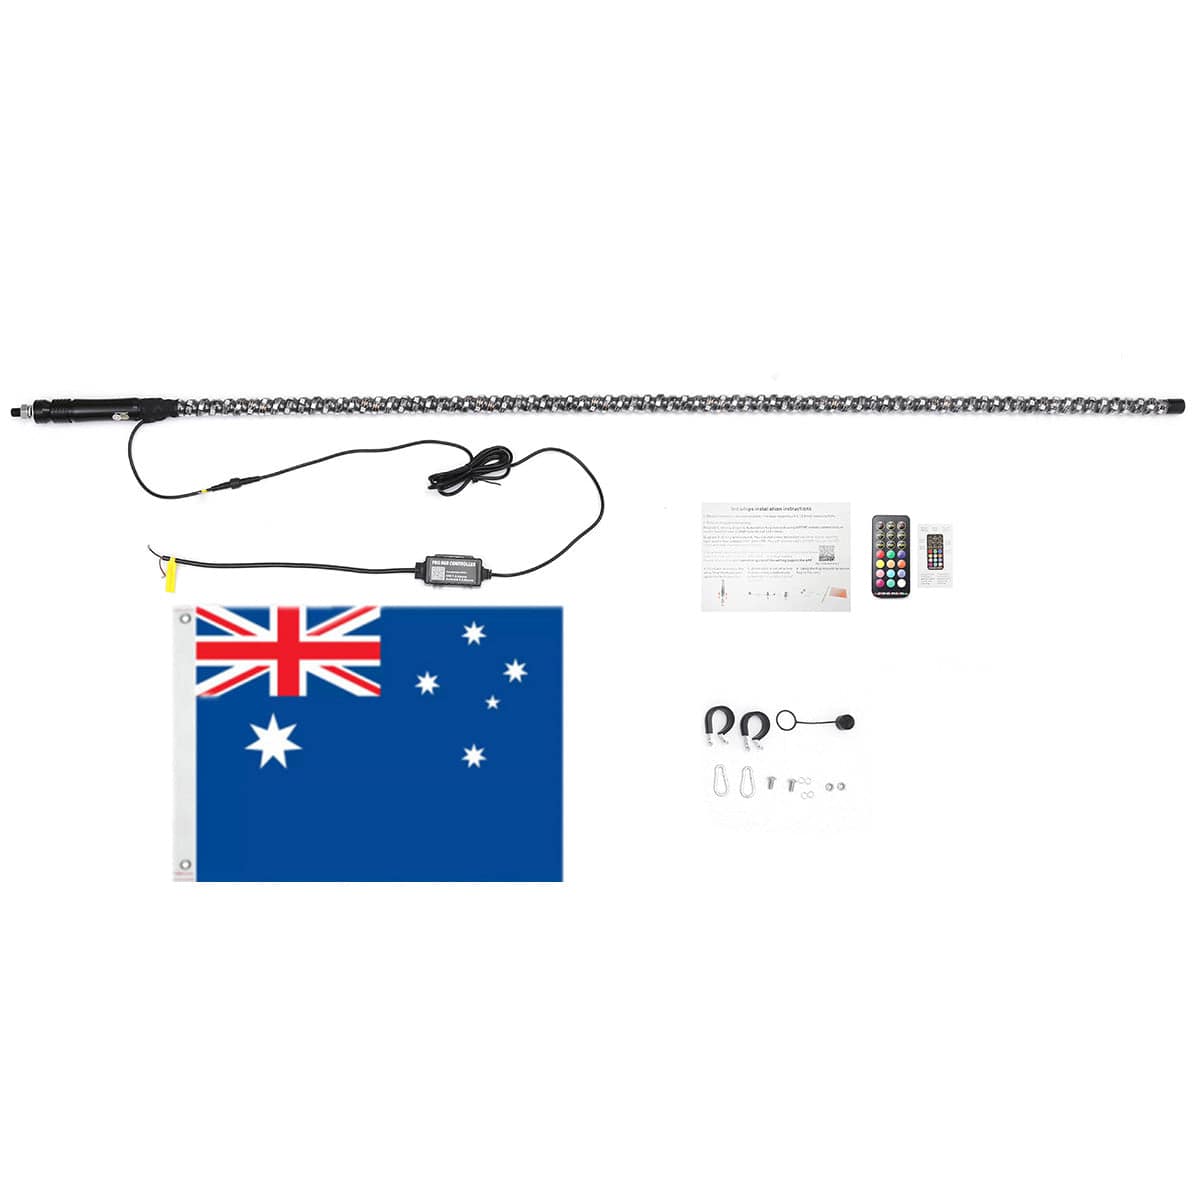 2PCS 5FT  LED Whip Lights Antenna Flag Pole (Online Only) - OZI4X4 PTY LTD